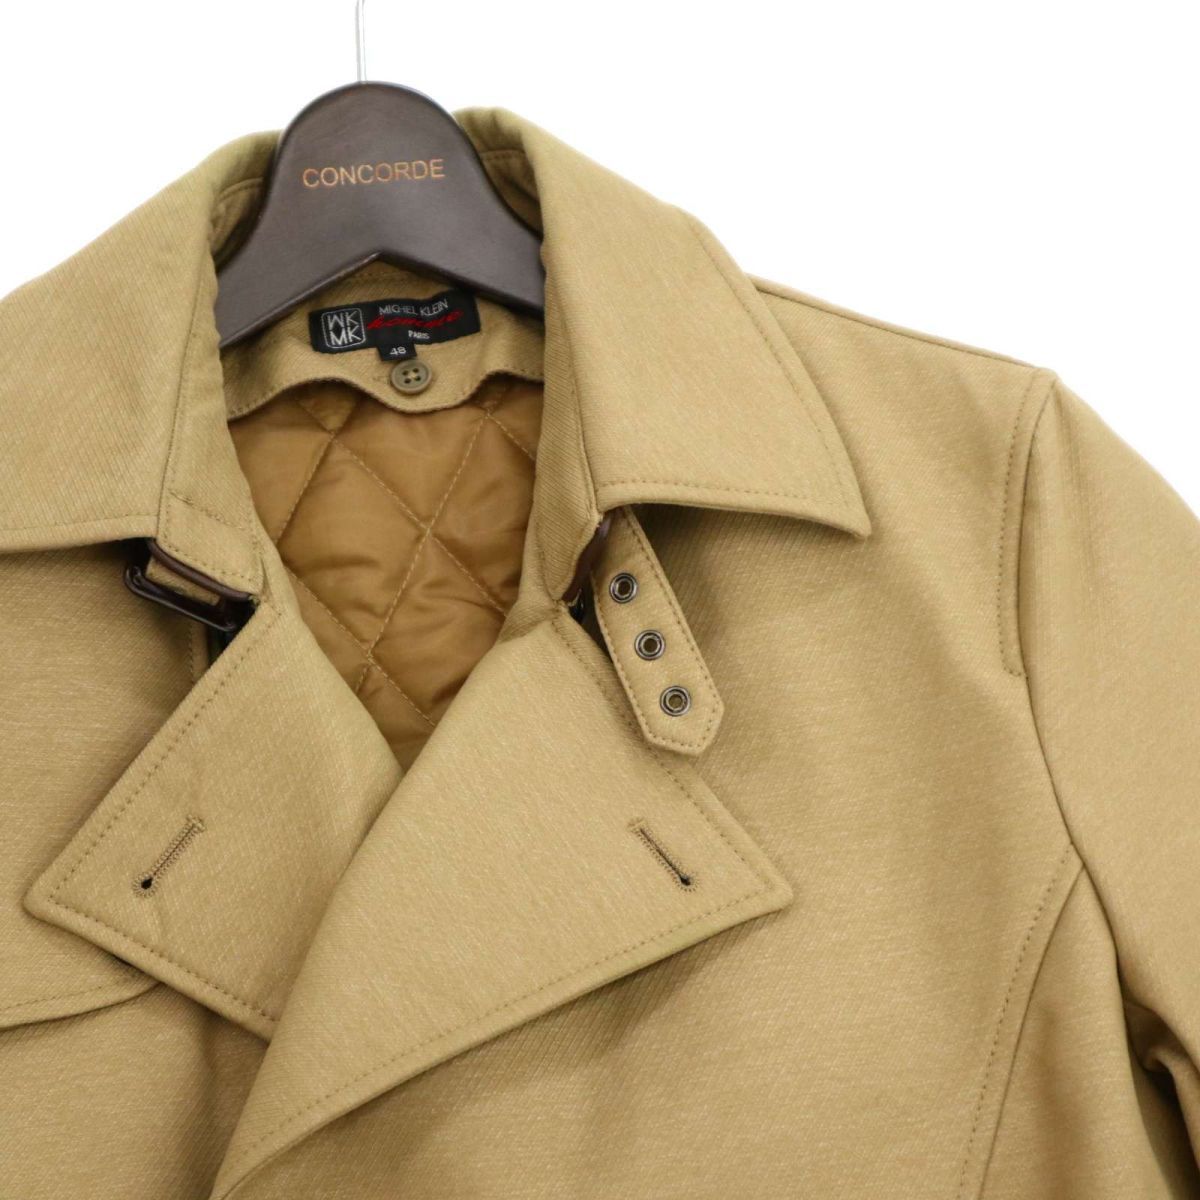 MK HOMME Michel Klein Homme autumn winter cotton inside liner * trench coat Sz.48 men's beige C3T09867_B#N